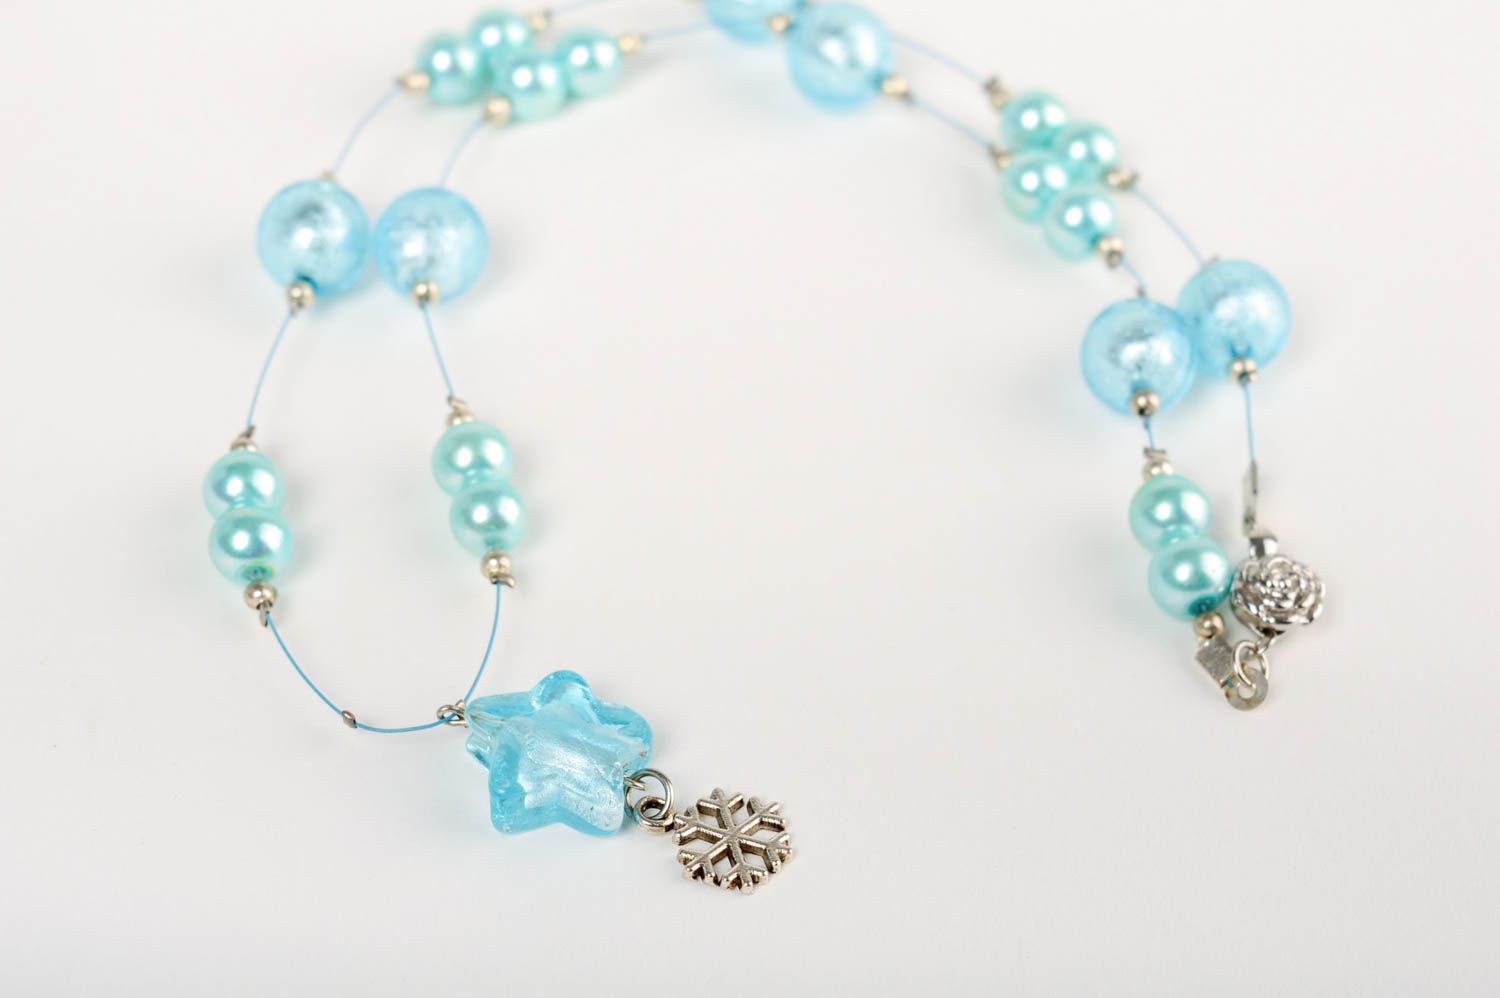 Handmade Venetian glass and ceramic pearls necklace handmade designer accessory photo 3